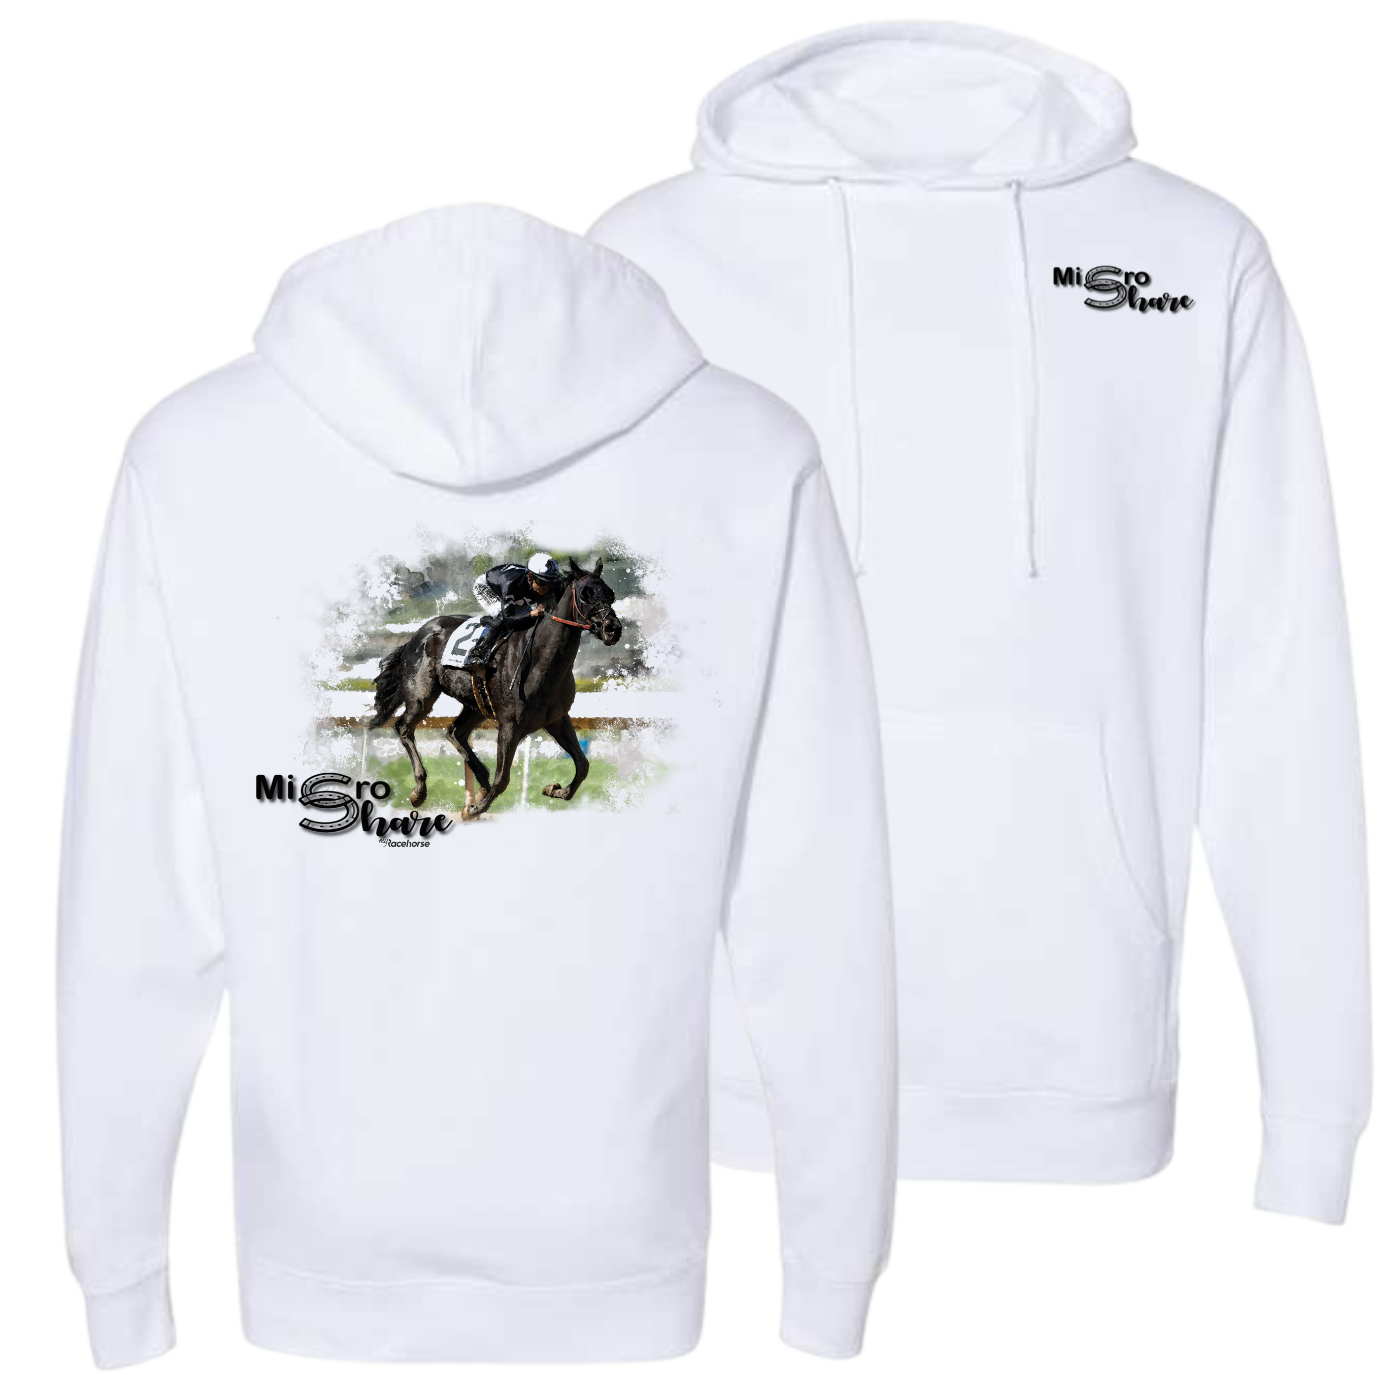 Micro Share Unisex Hooded Sweatshirt